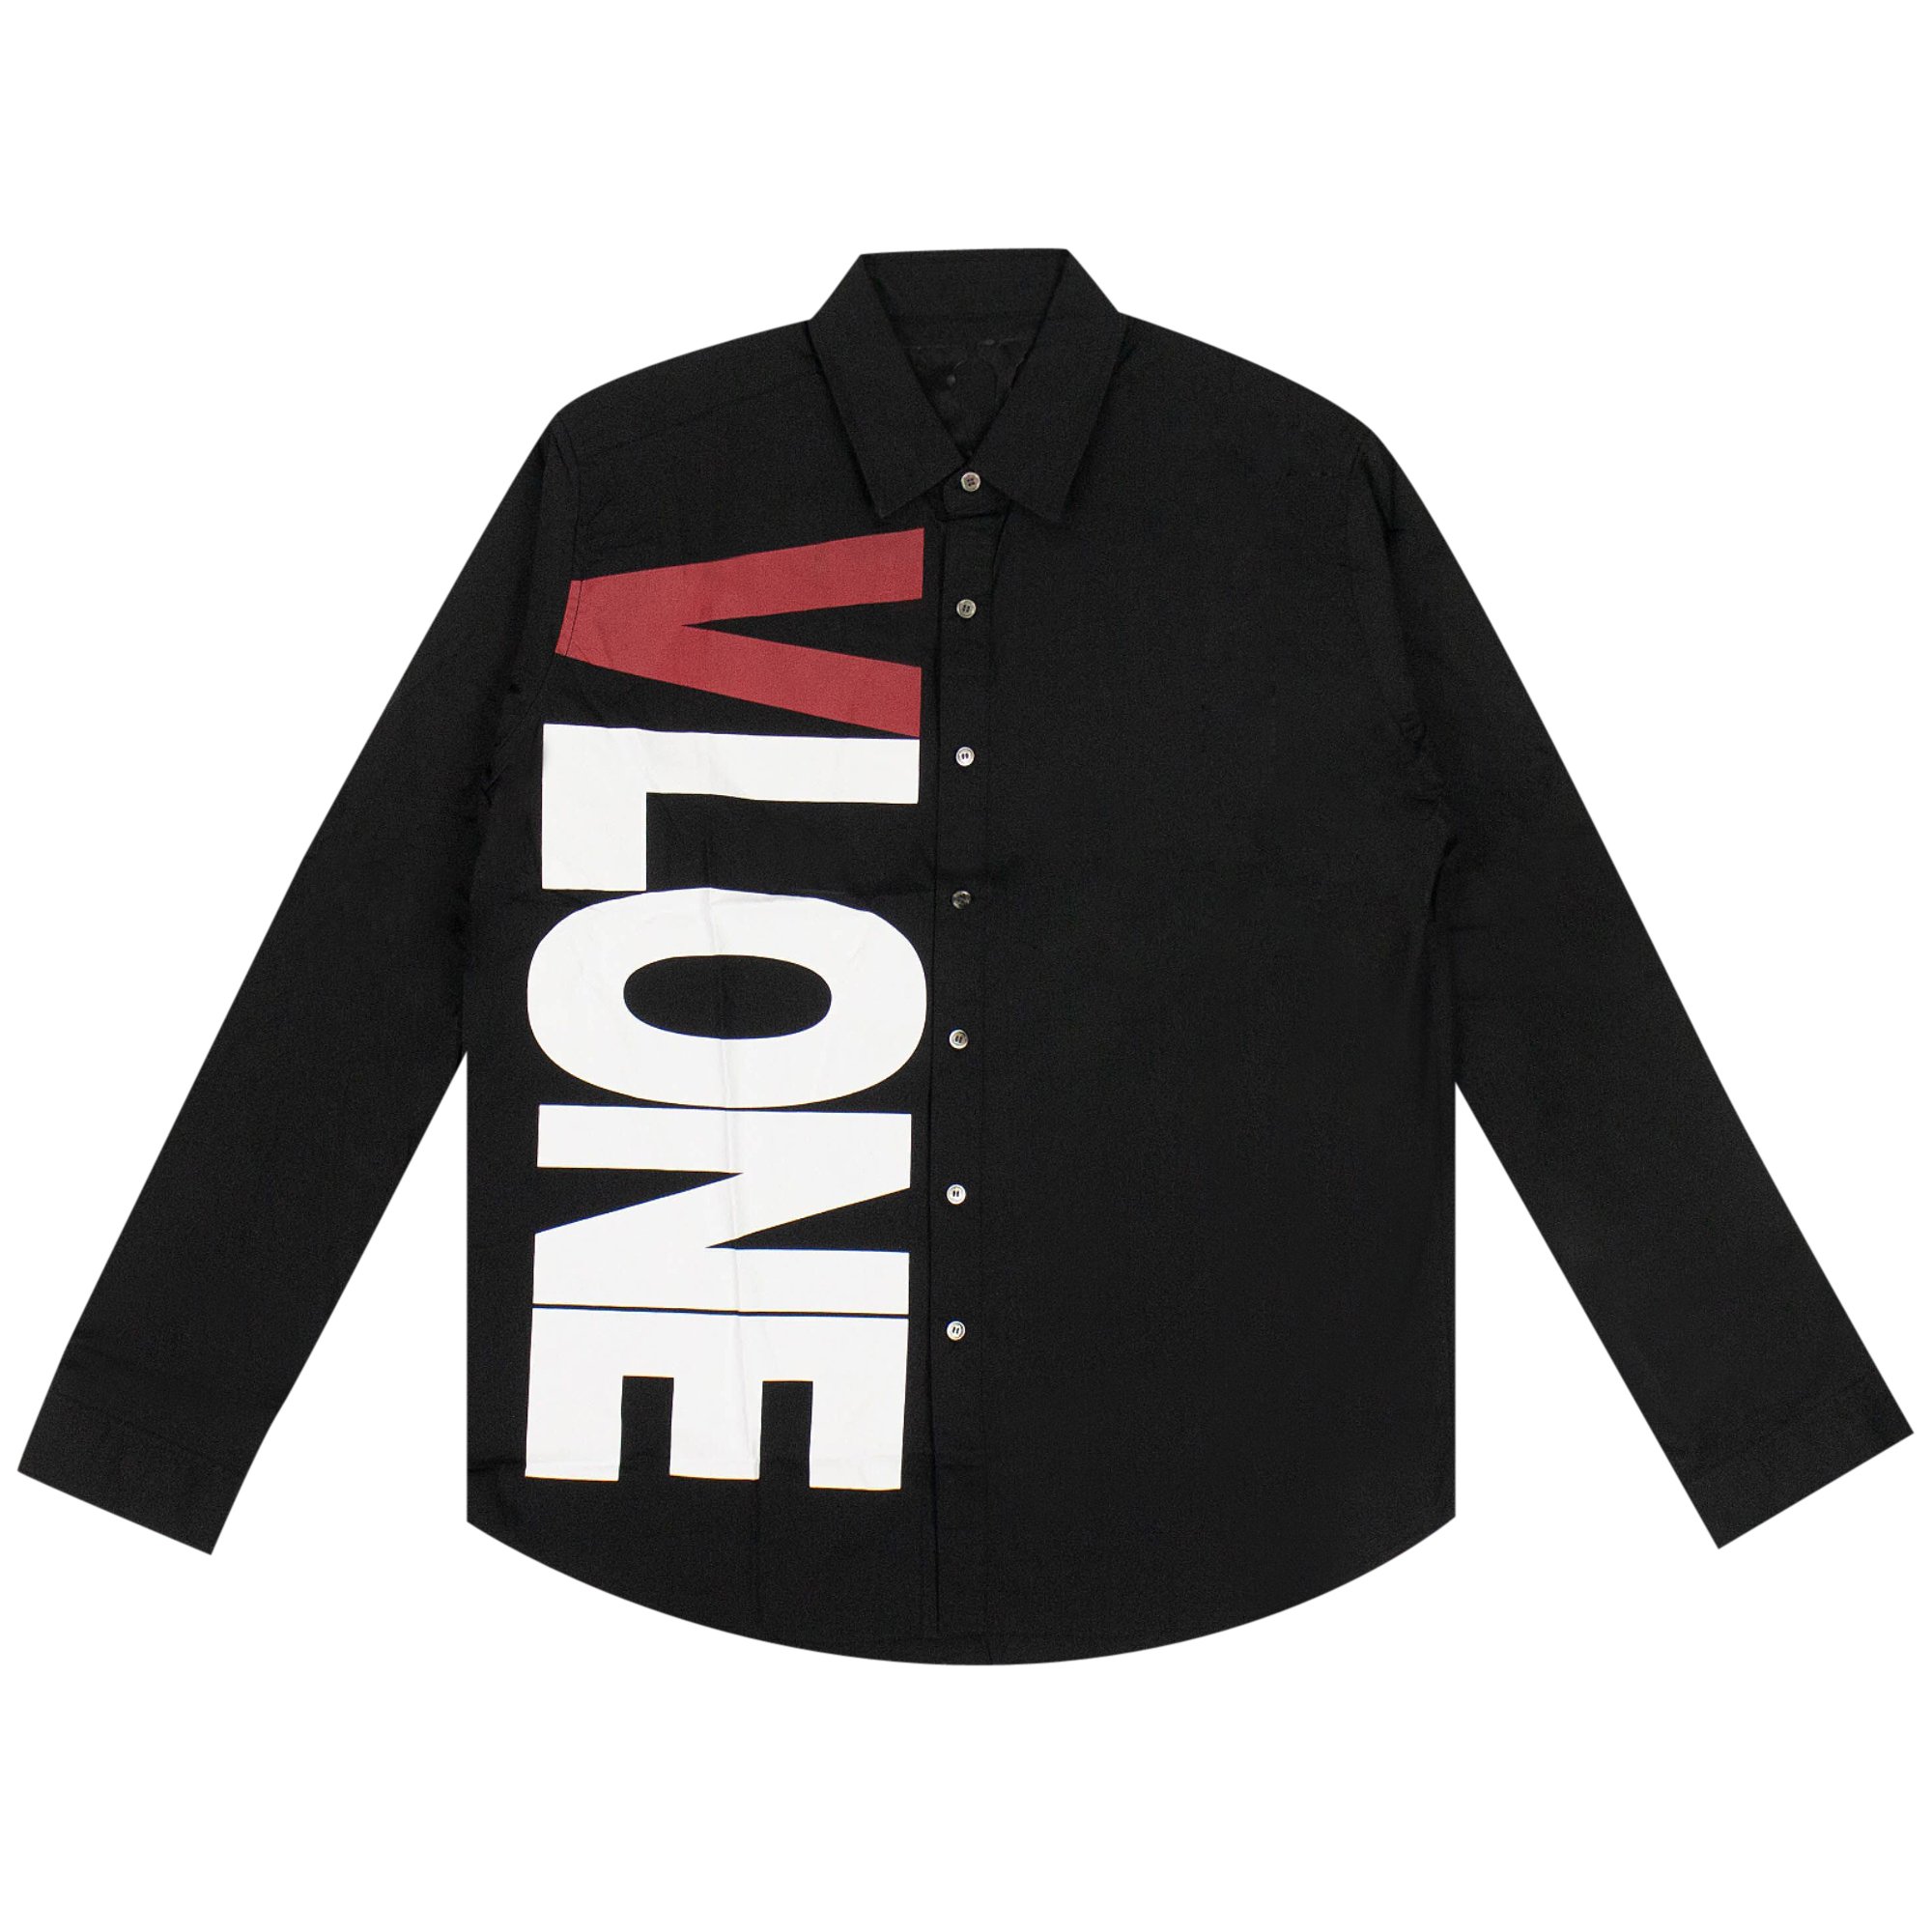 Buy Vlone Long-Sleeve Button Up Shirt Black - S 3JW005L | GOAT